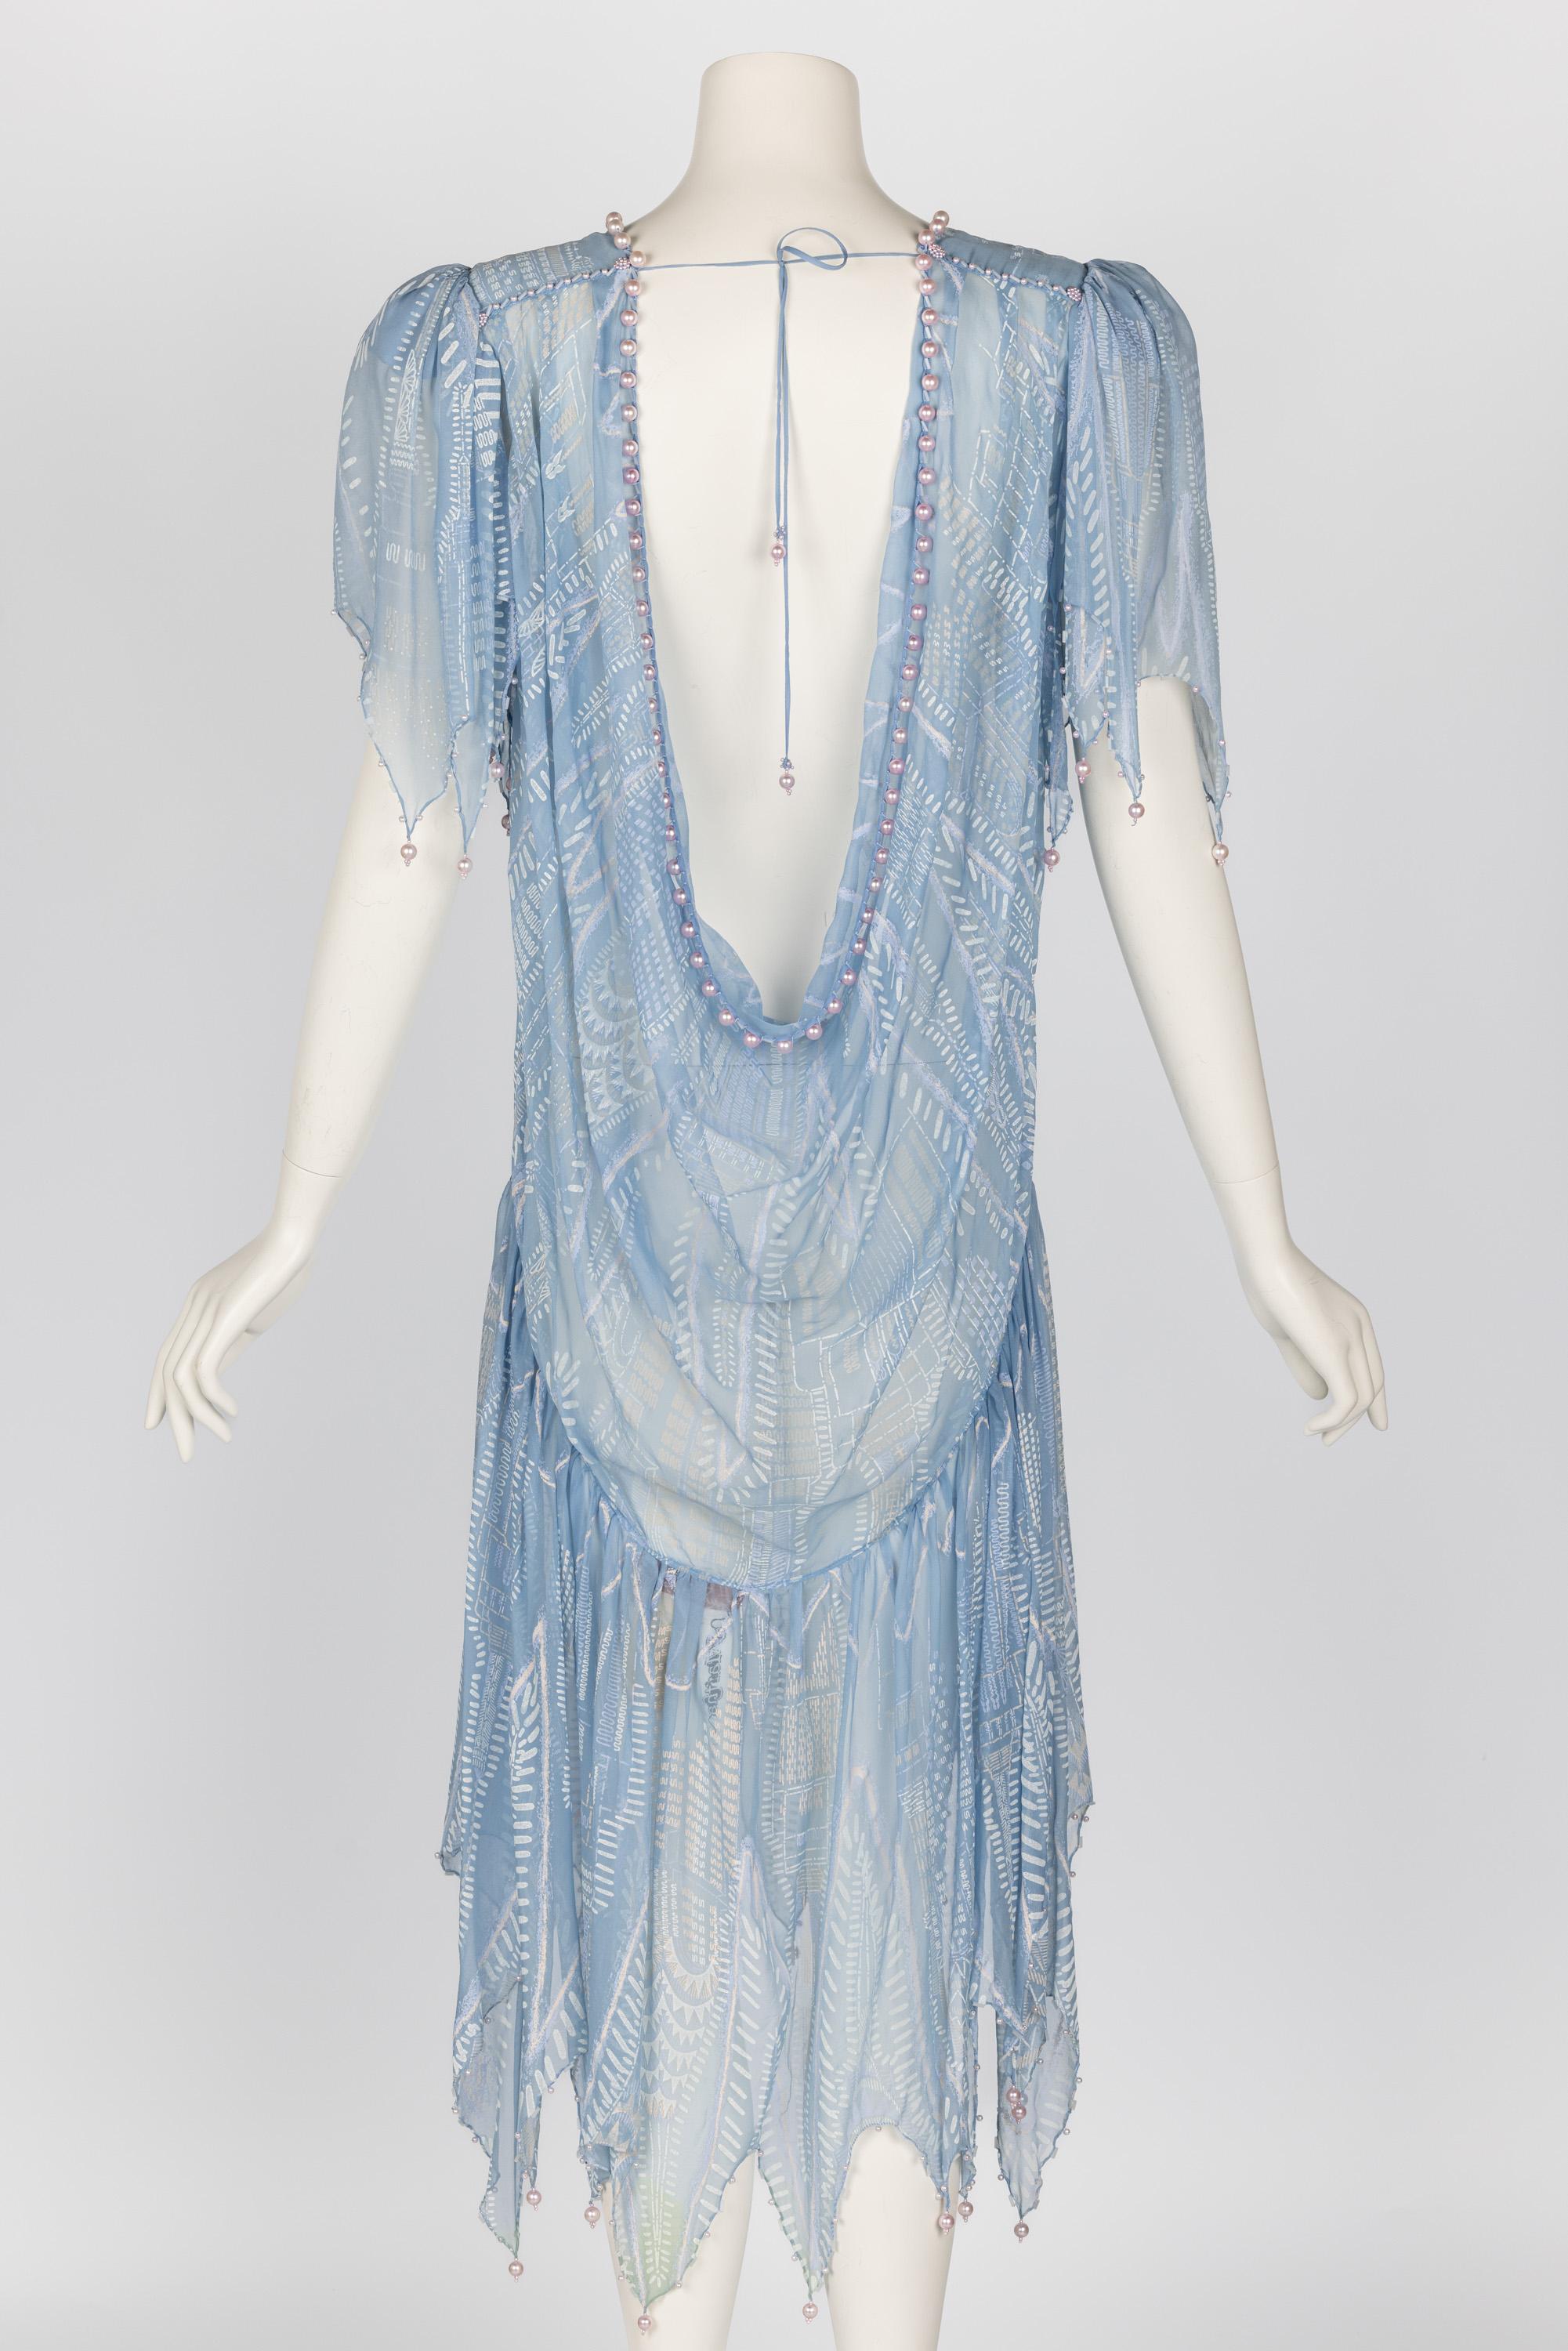 Zandra Rhodes Light Blue Hand Printed Sheer Silk Pearl Beaded Dress Museum Piece For Sale 1